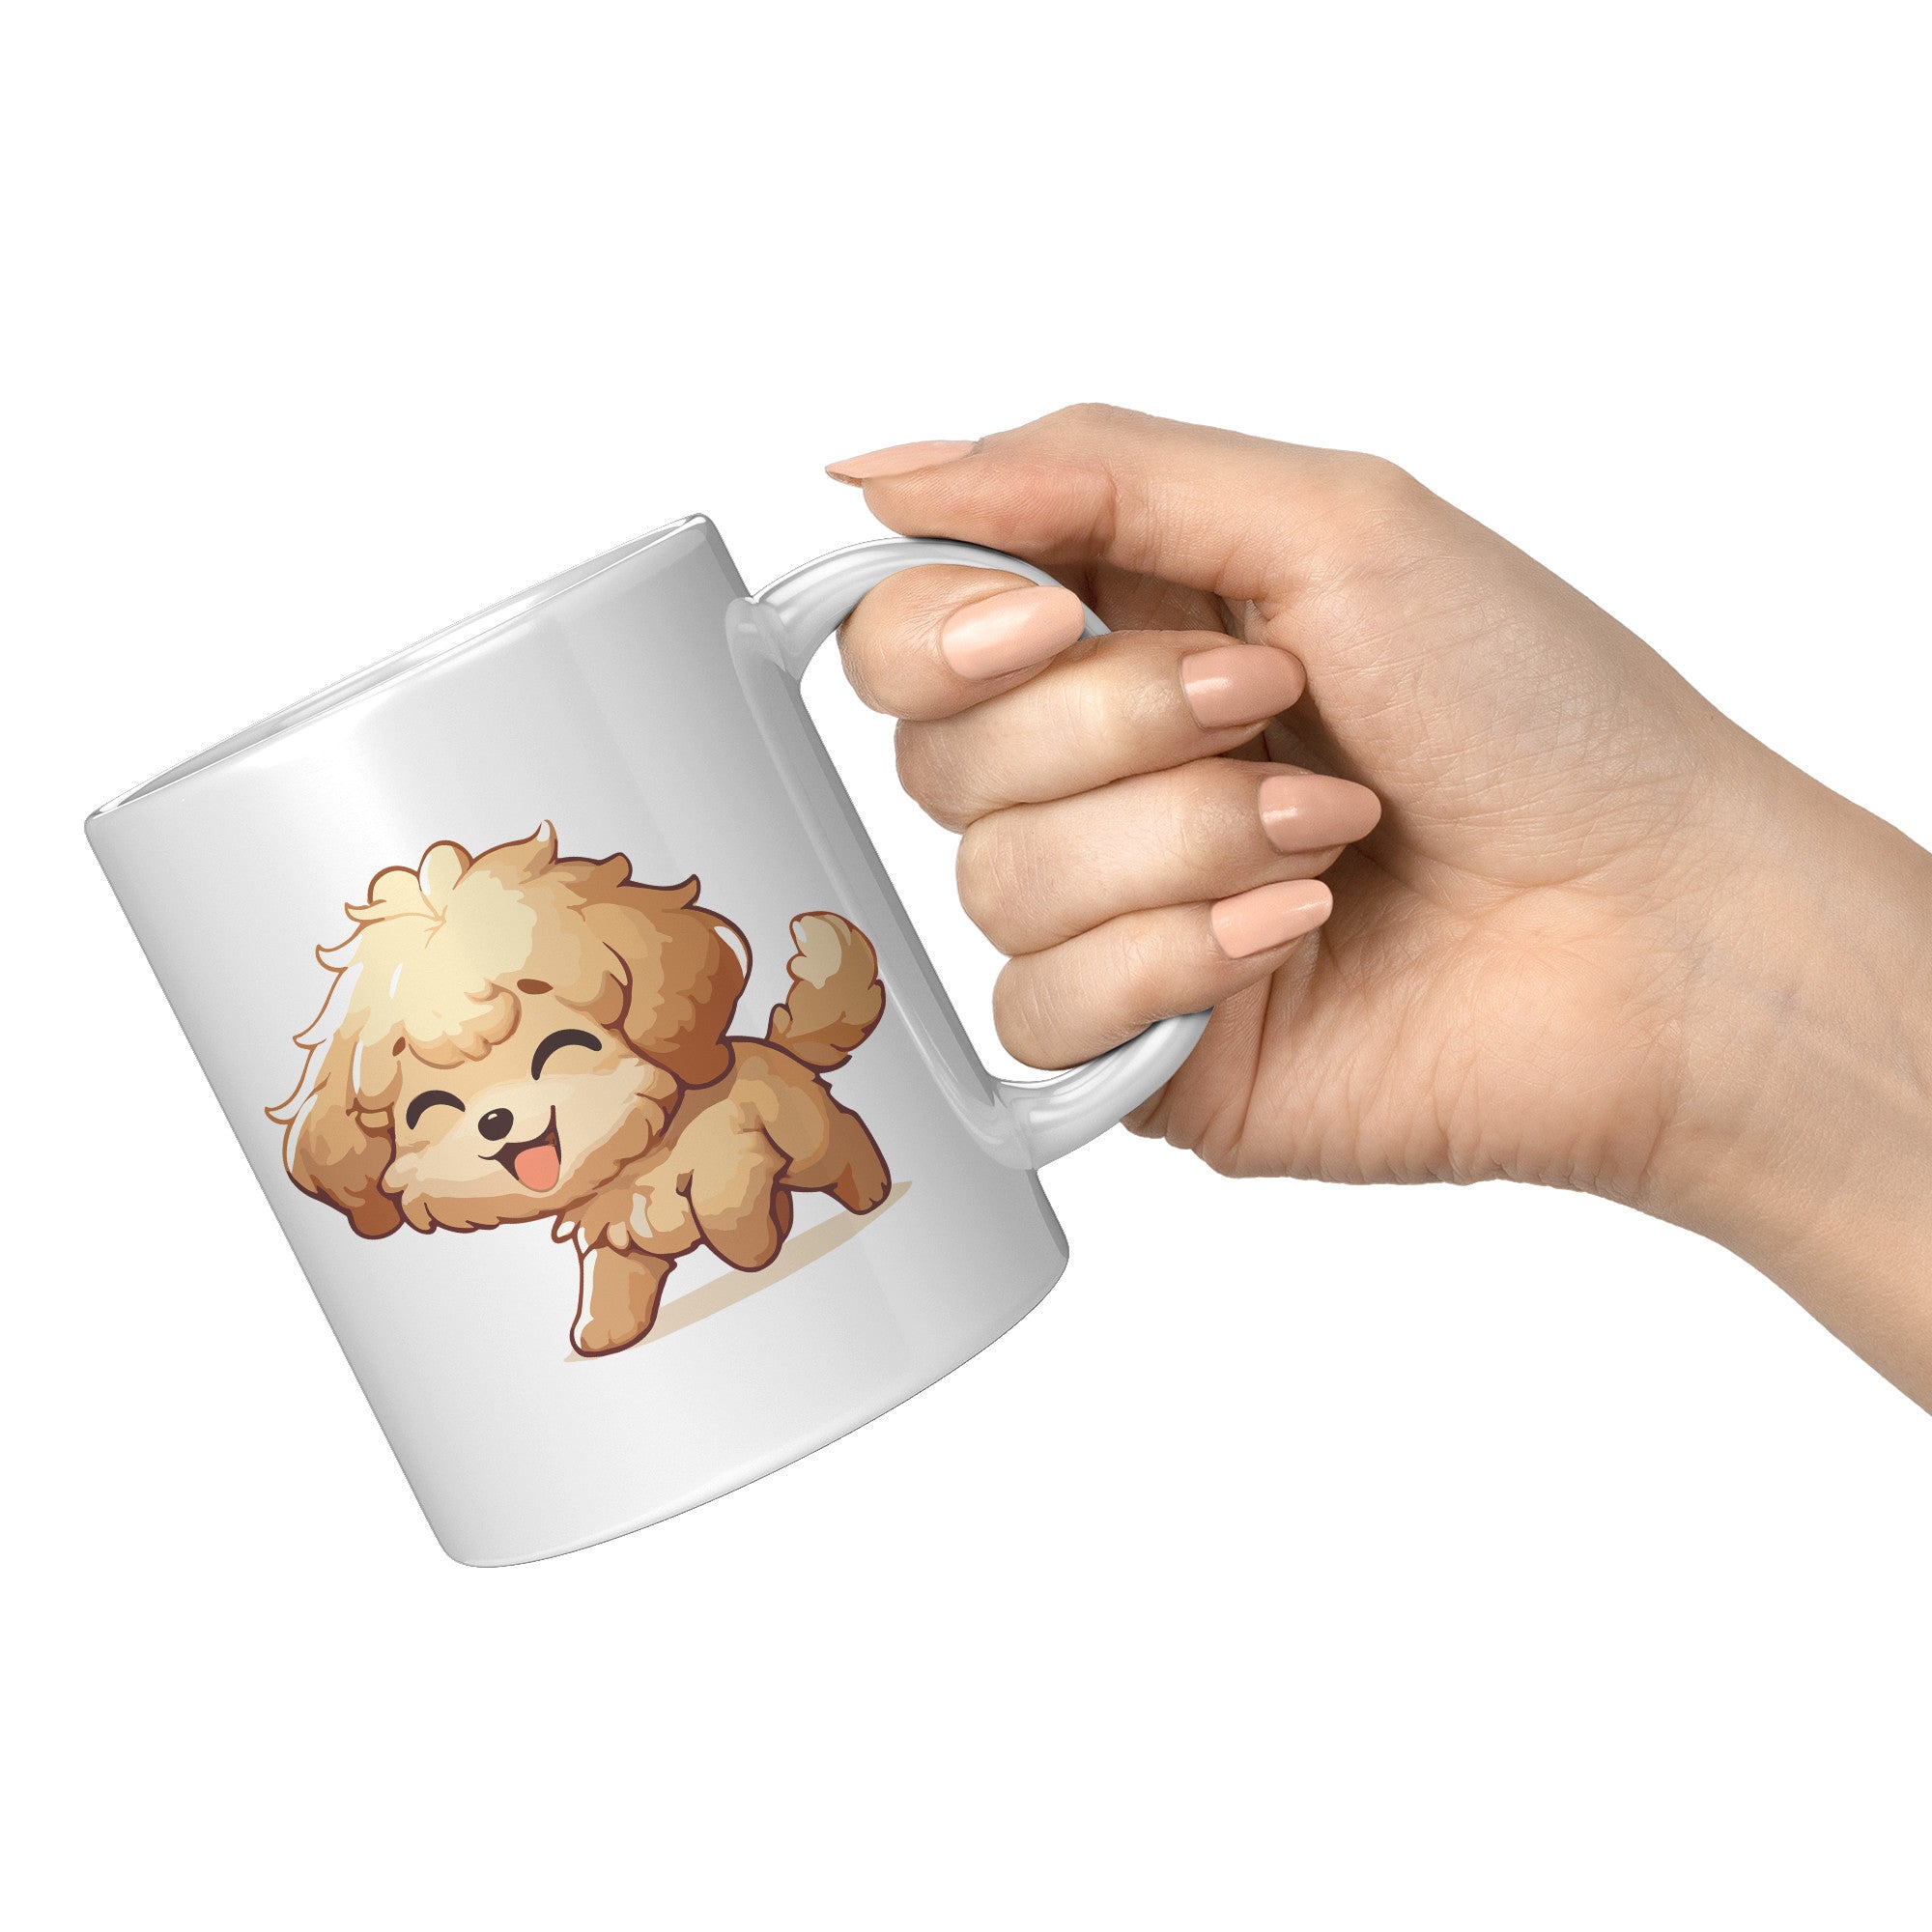 11oz Golden Retriever Cartoon Coffee Mug - Heartwarming Dog Lover Coffee Mug - Perfect Gift for Golden Owners - Friendly Pup Coffee Mug - U